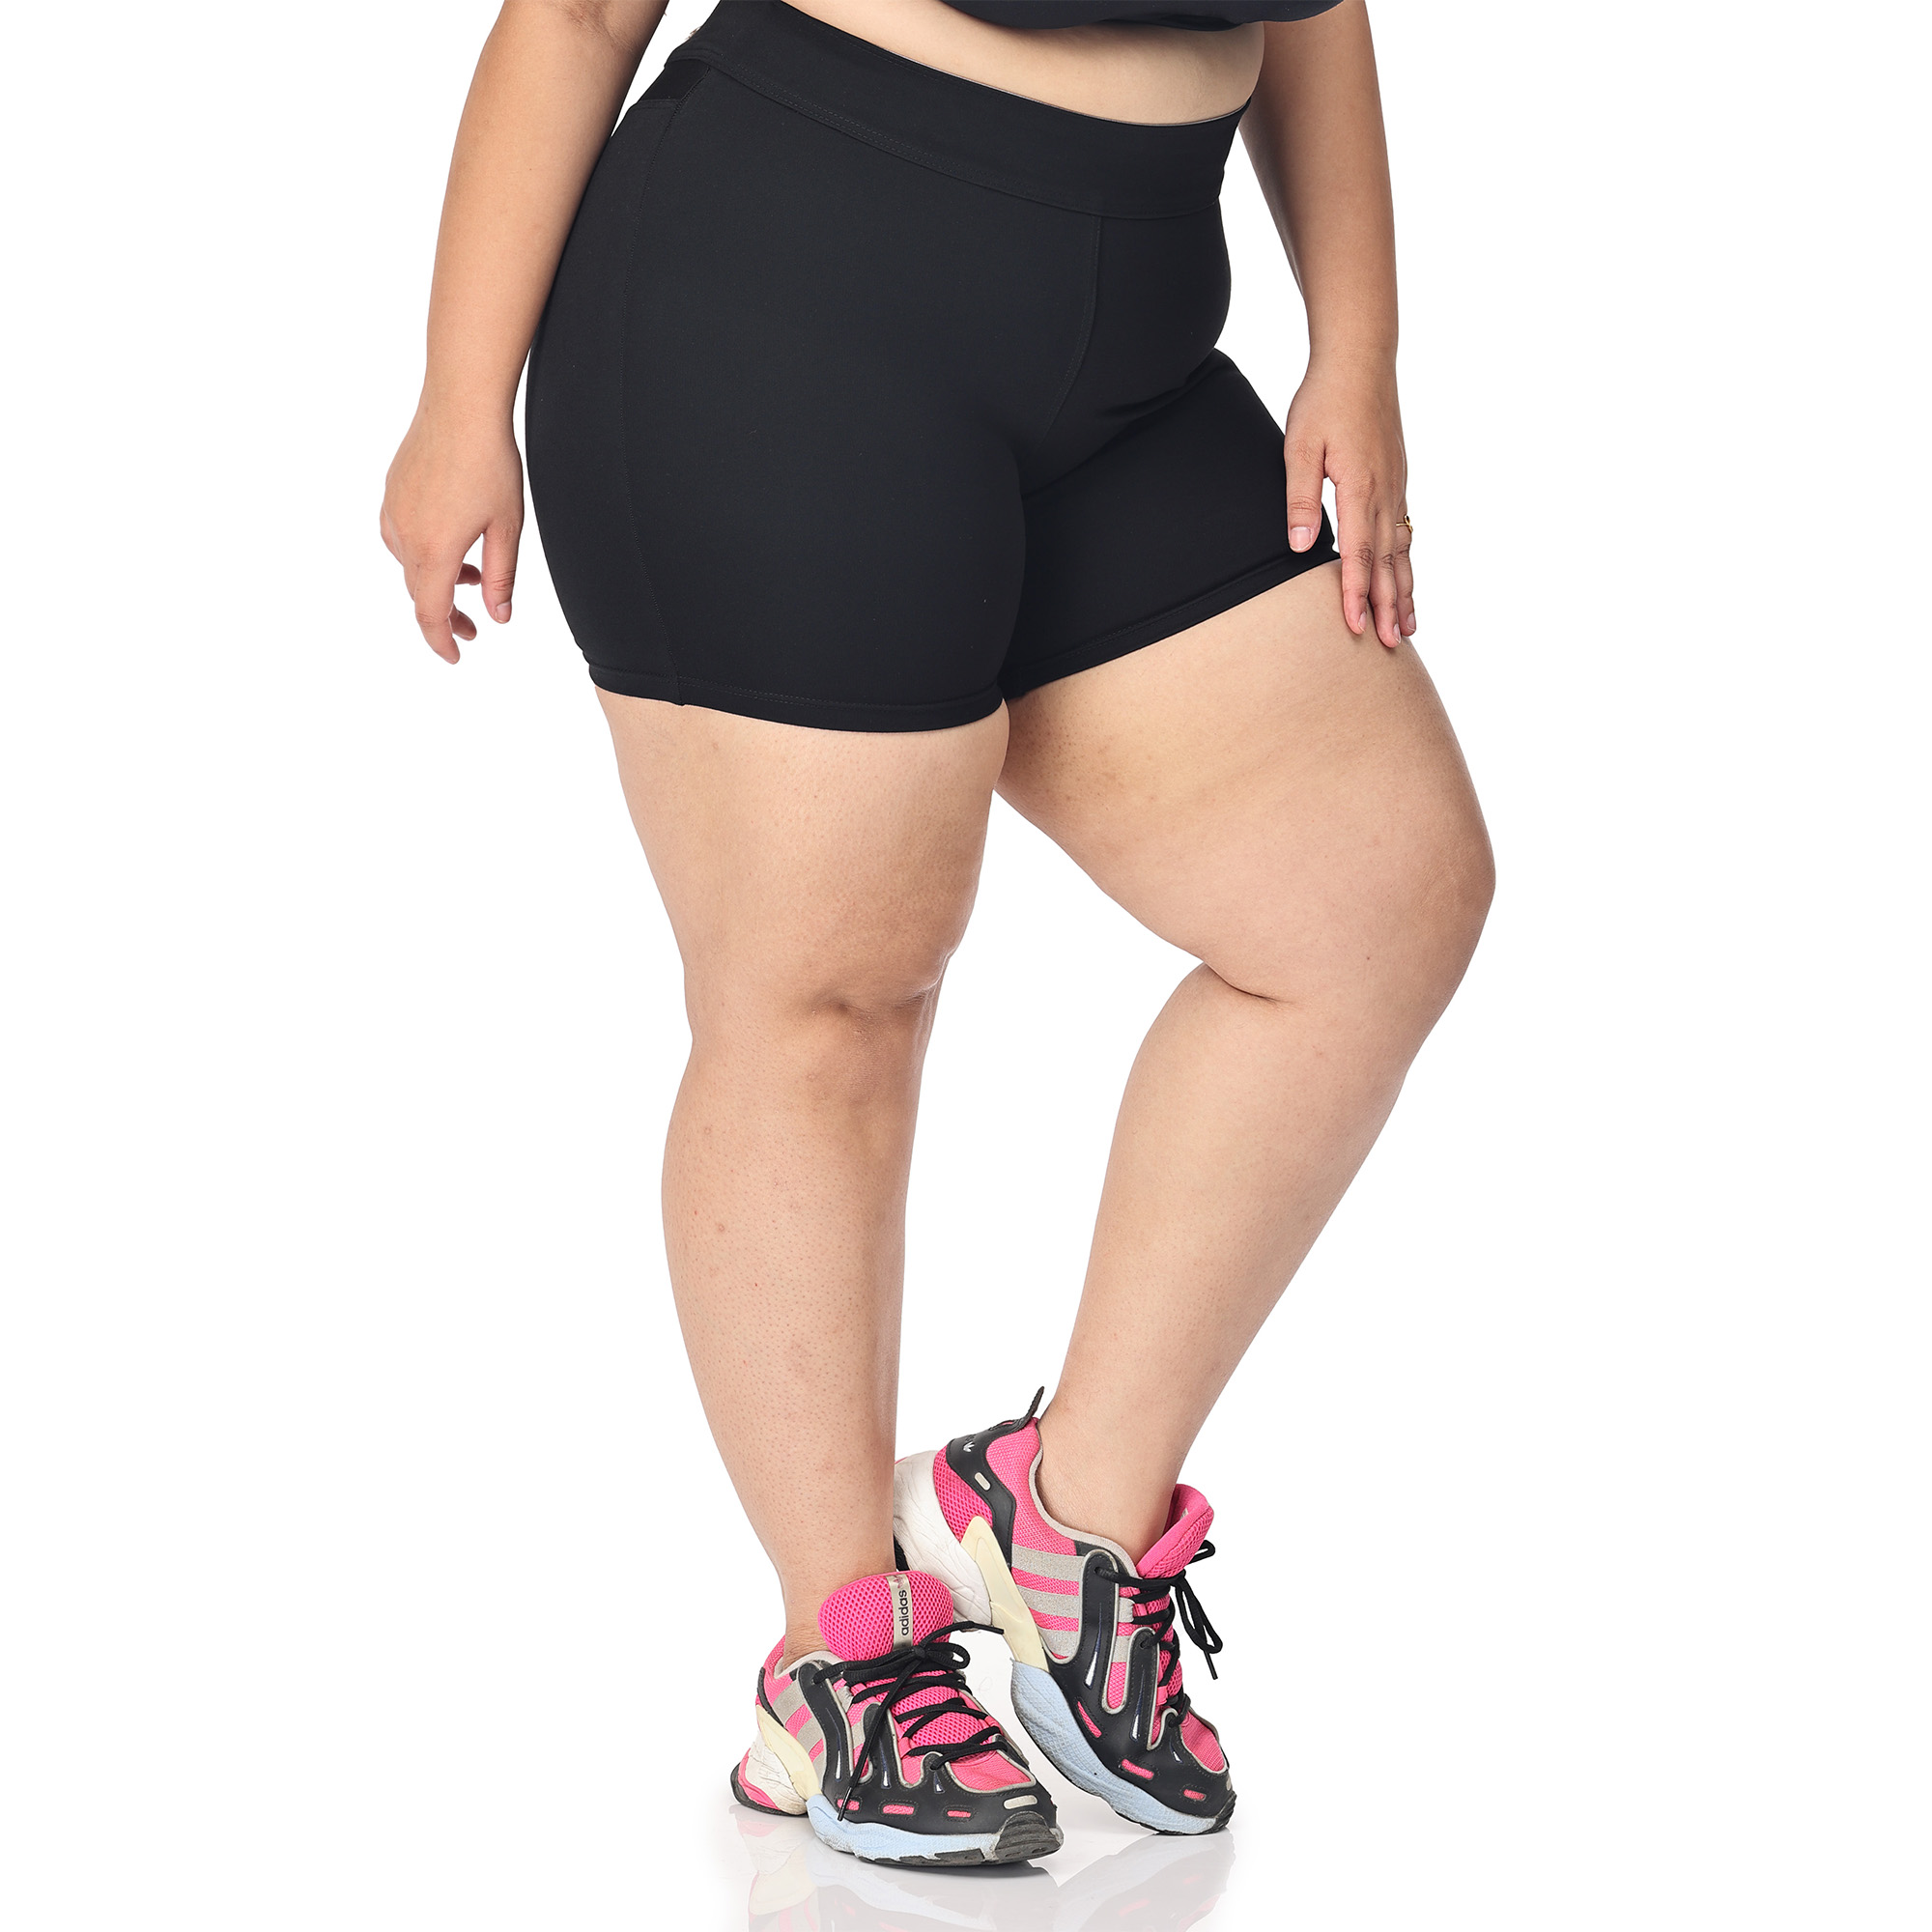 Black shorts for women – Active shape wear - 2 back pockets